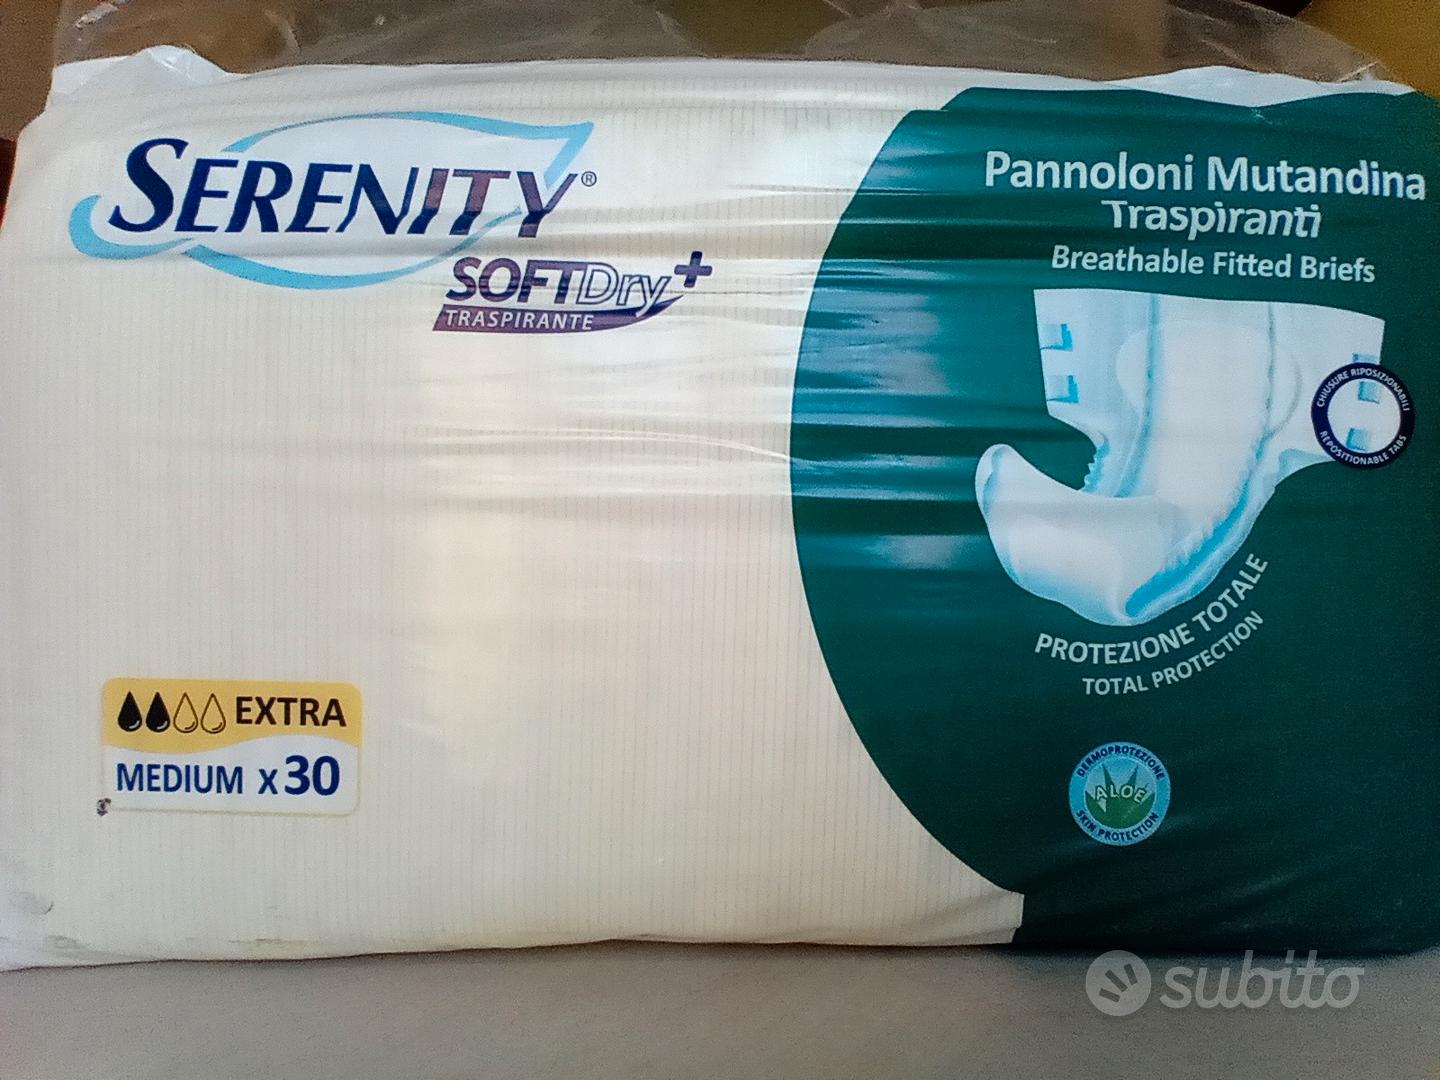 Serenity Soft Dry+ Extra assorbente pannolone mutandina per incontinenza  taglia M 30 pezzi